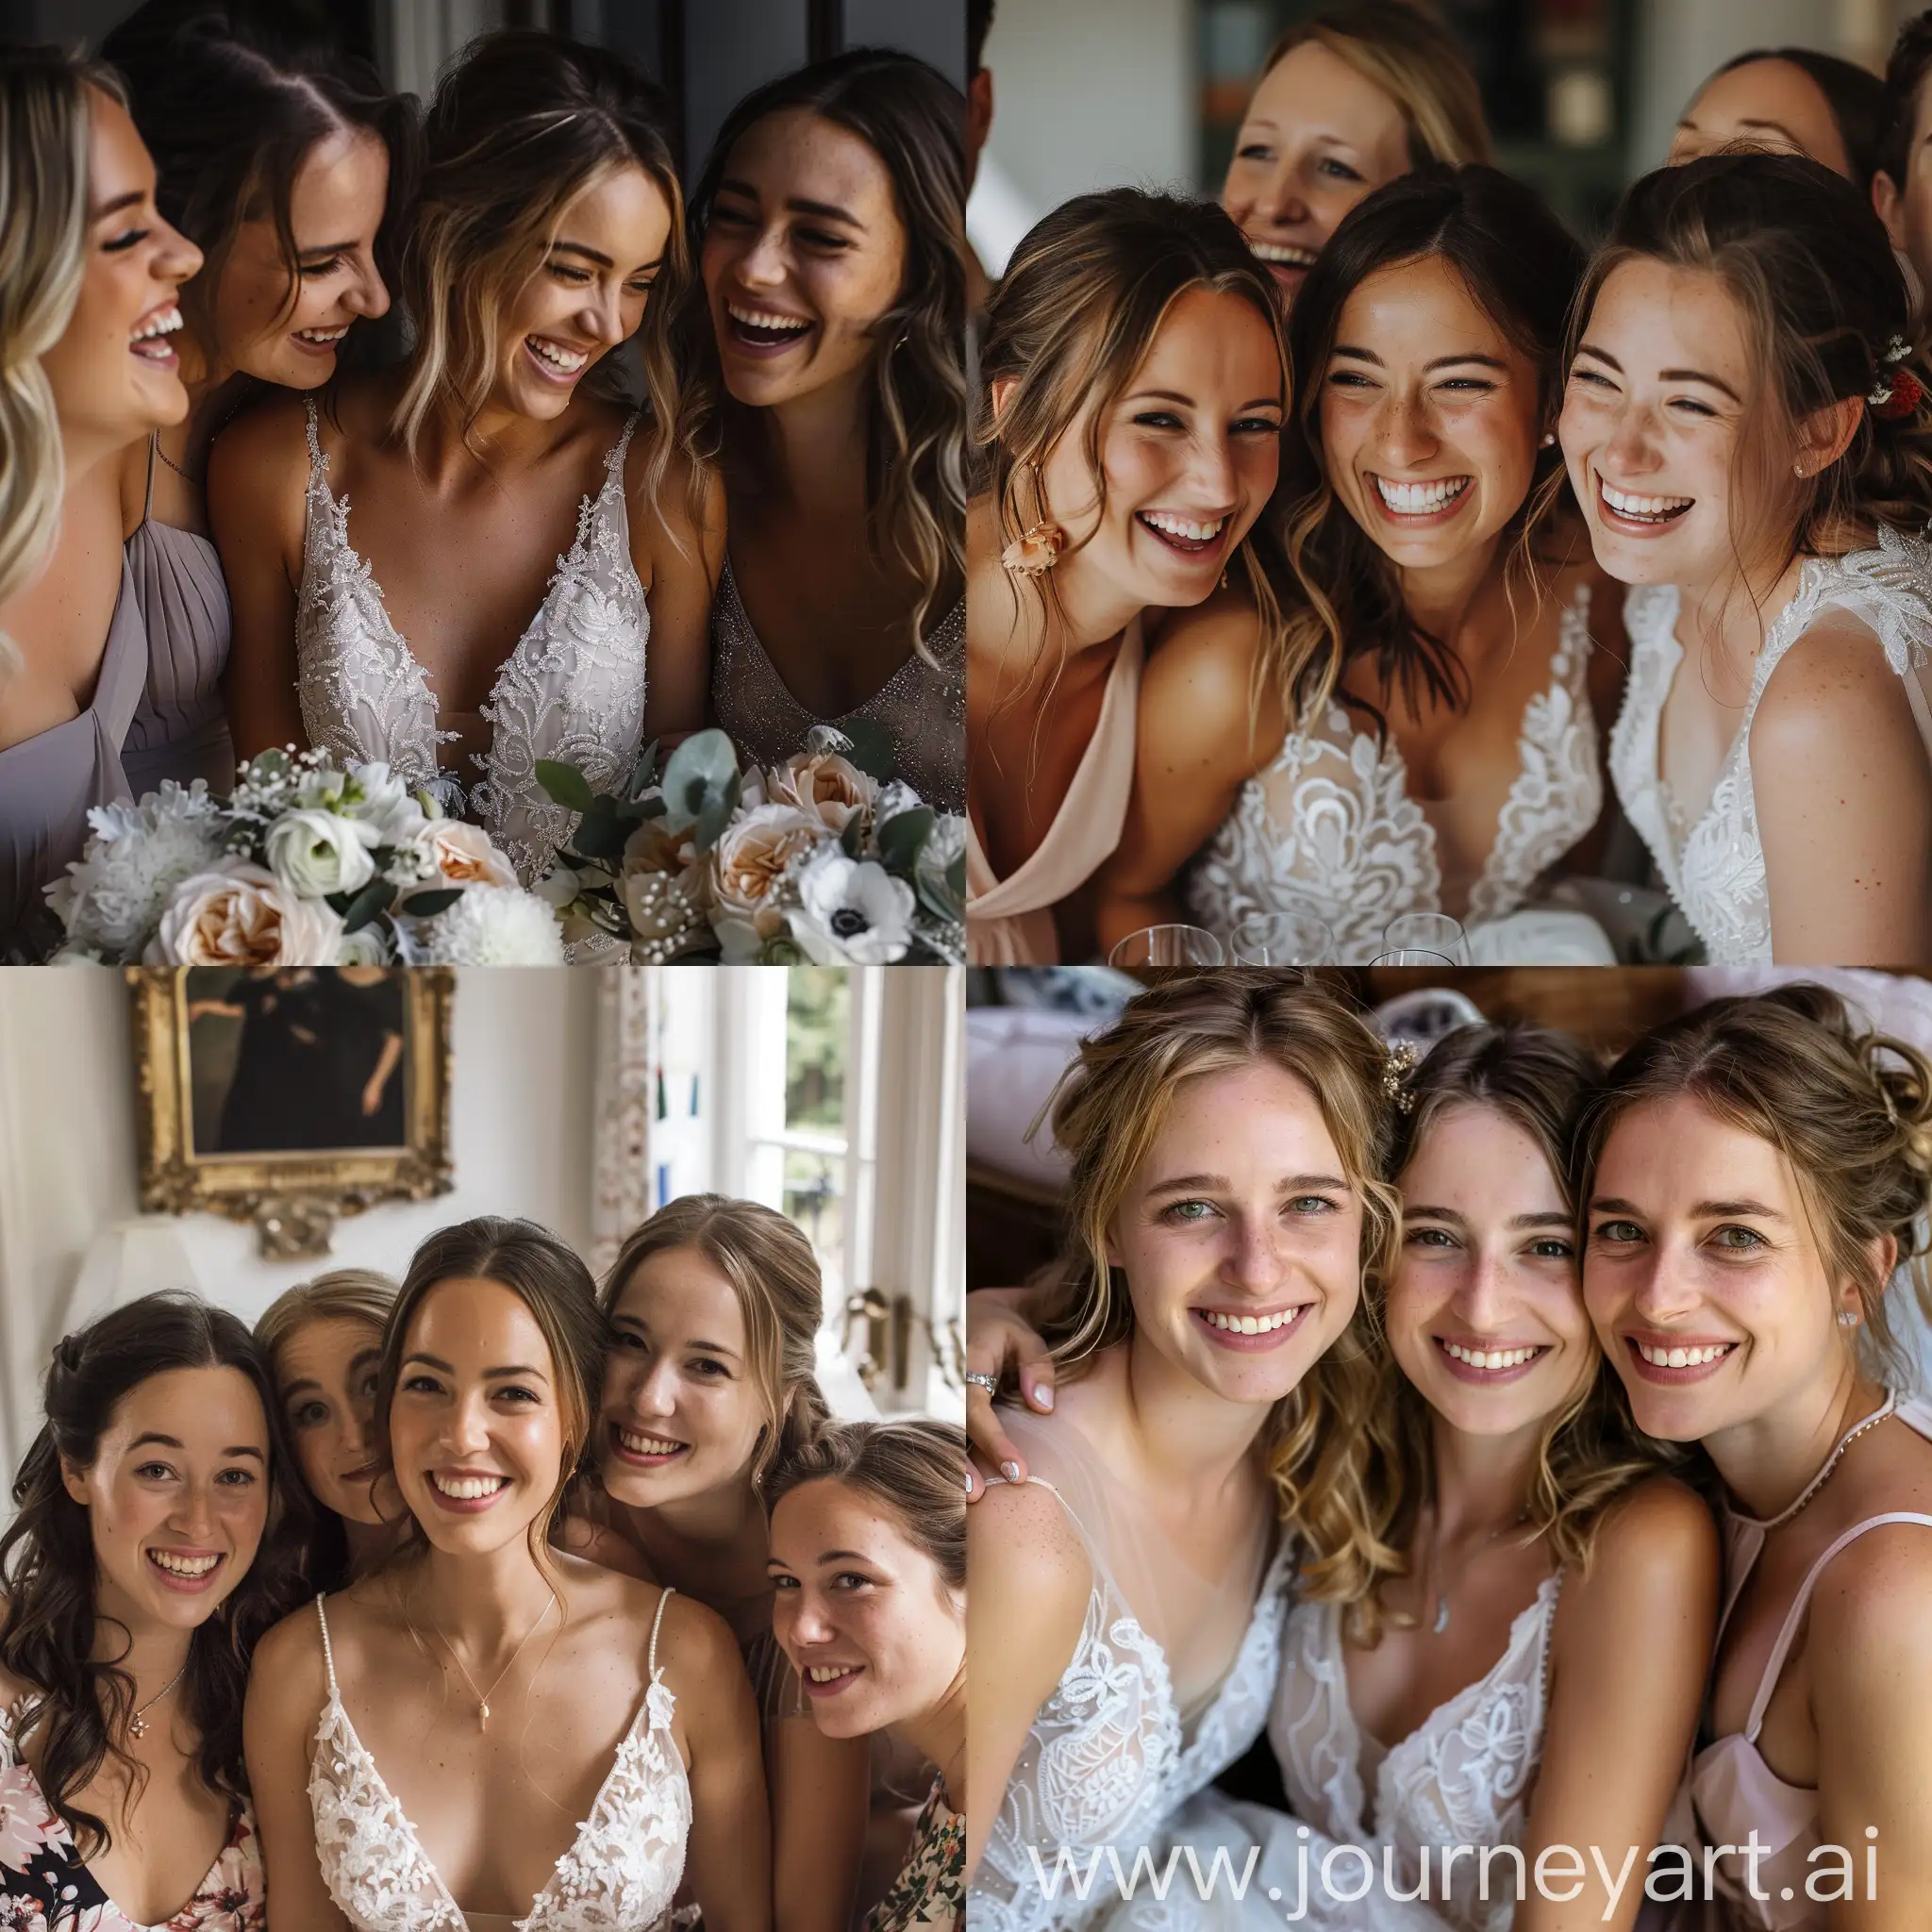 Joyful-Bride-Celebrating-Wedding-Day-with-Friends